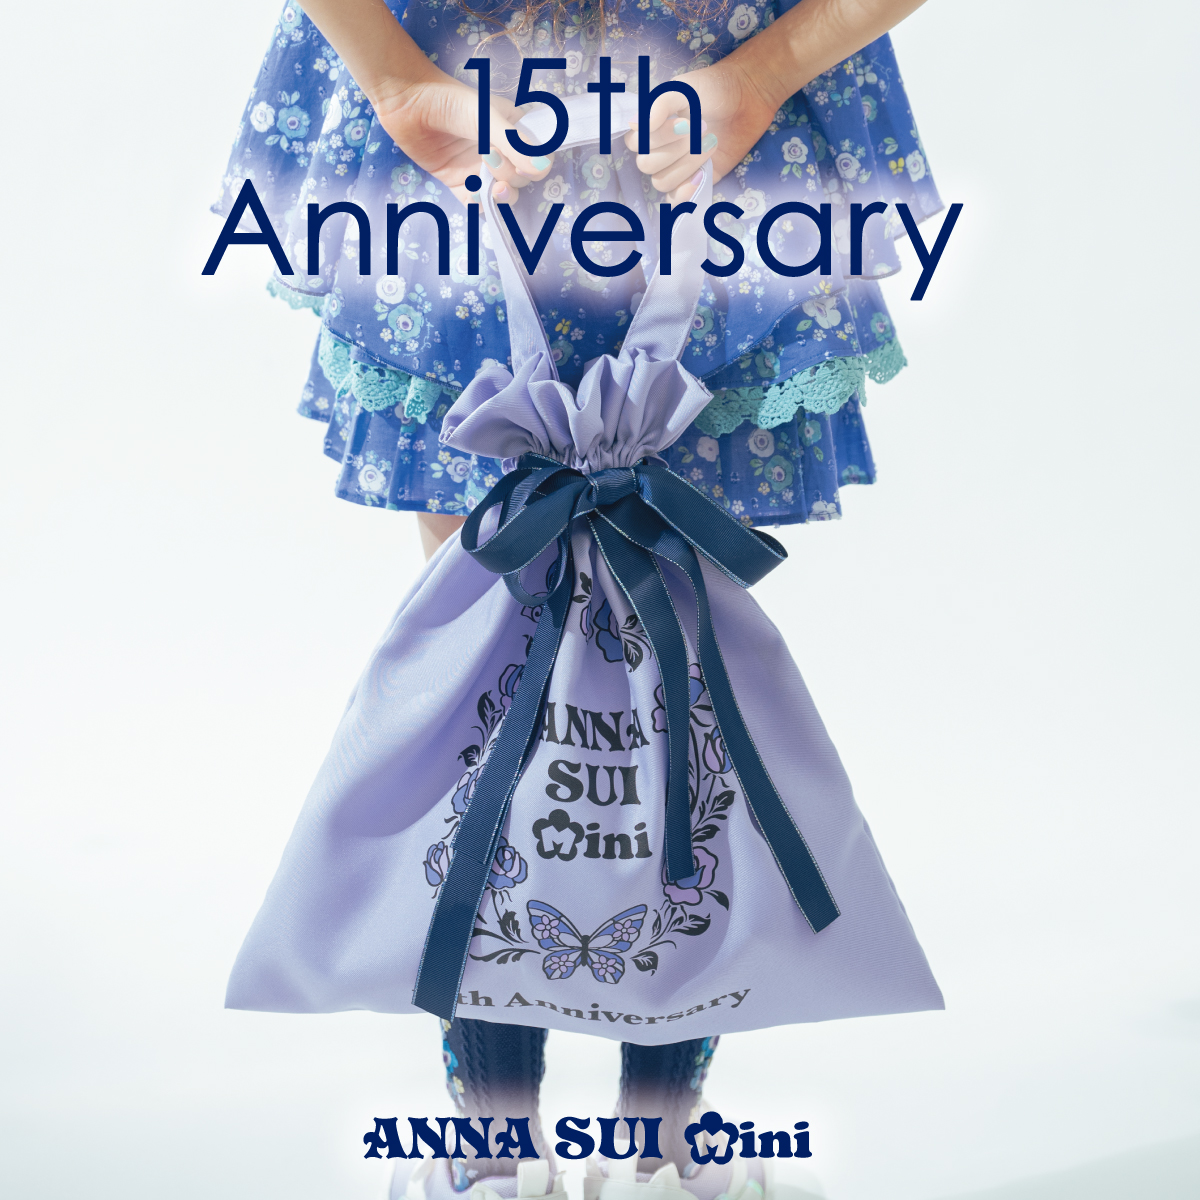 ANNA SUI mini 15th Anniversary  
【店舗限定】15周年を記念してオリジナルショップバッグが登場！